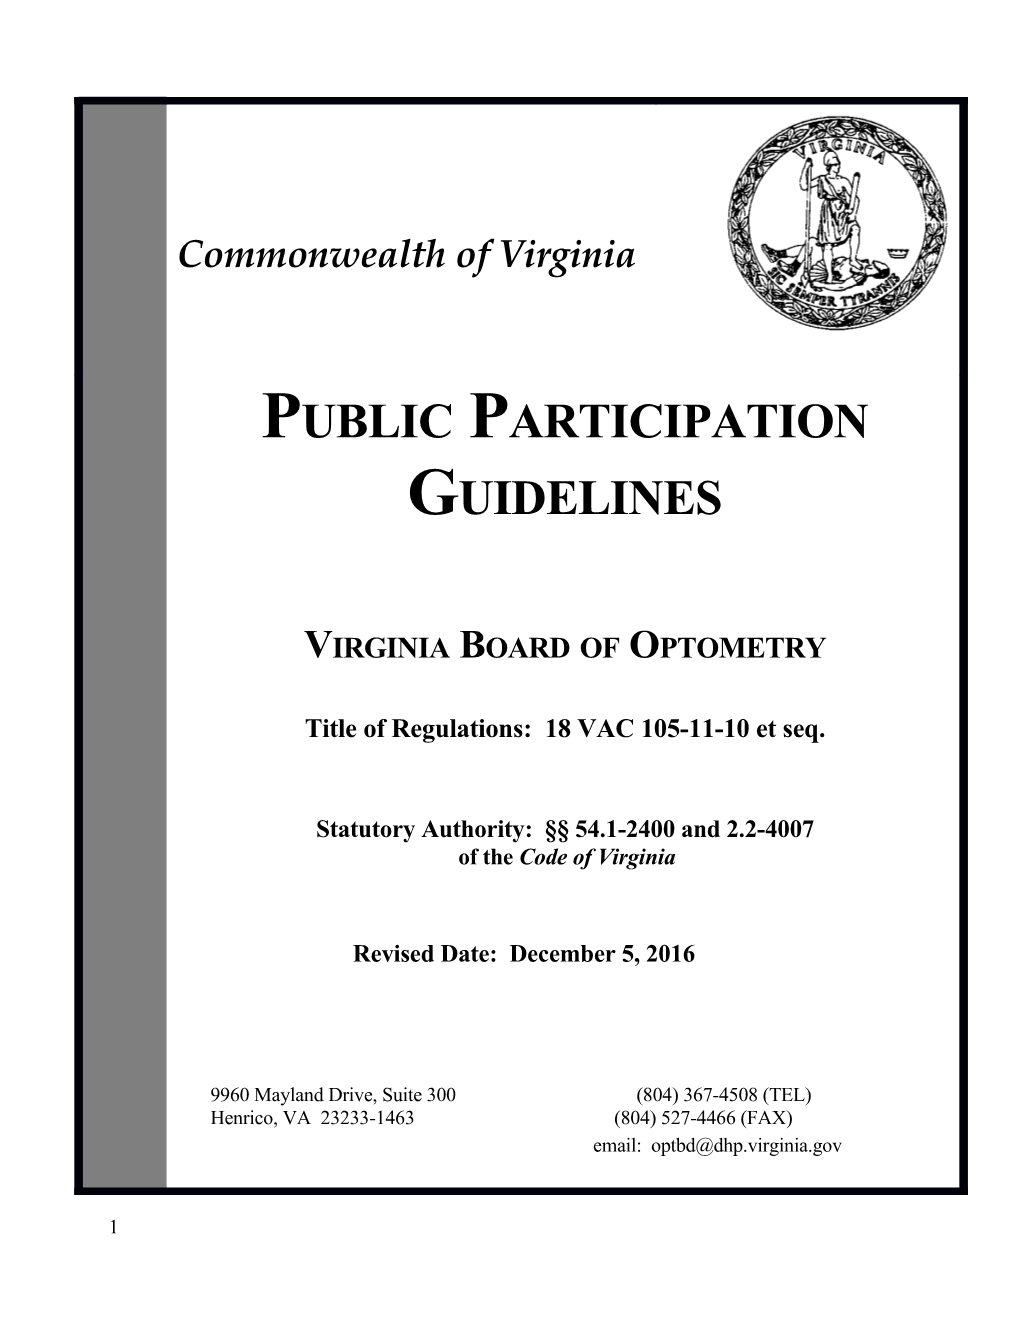 Virginia Board of Optometry Public Participation Guidelines